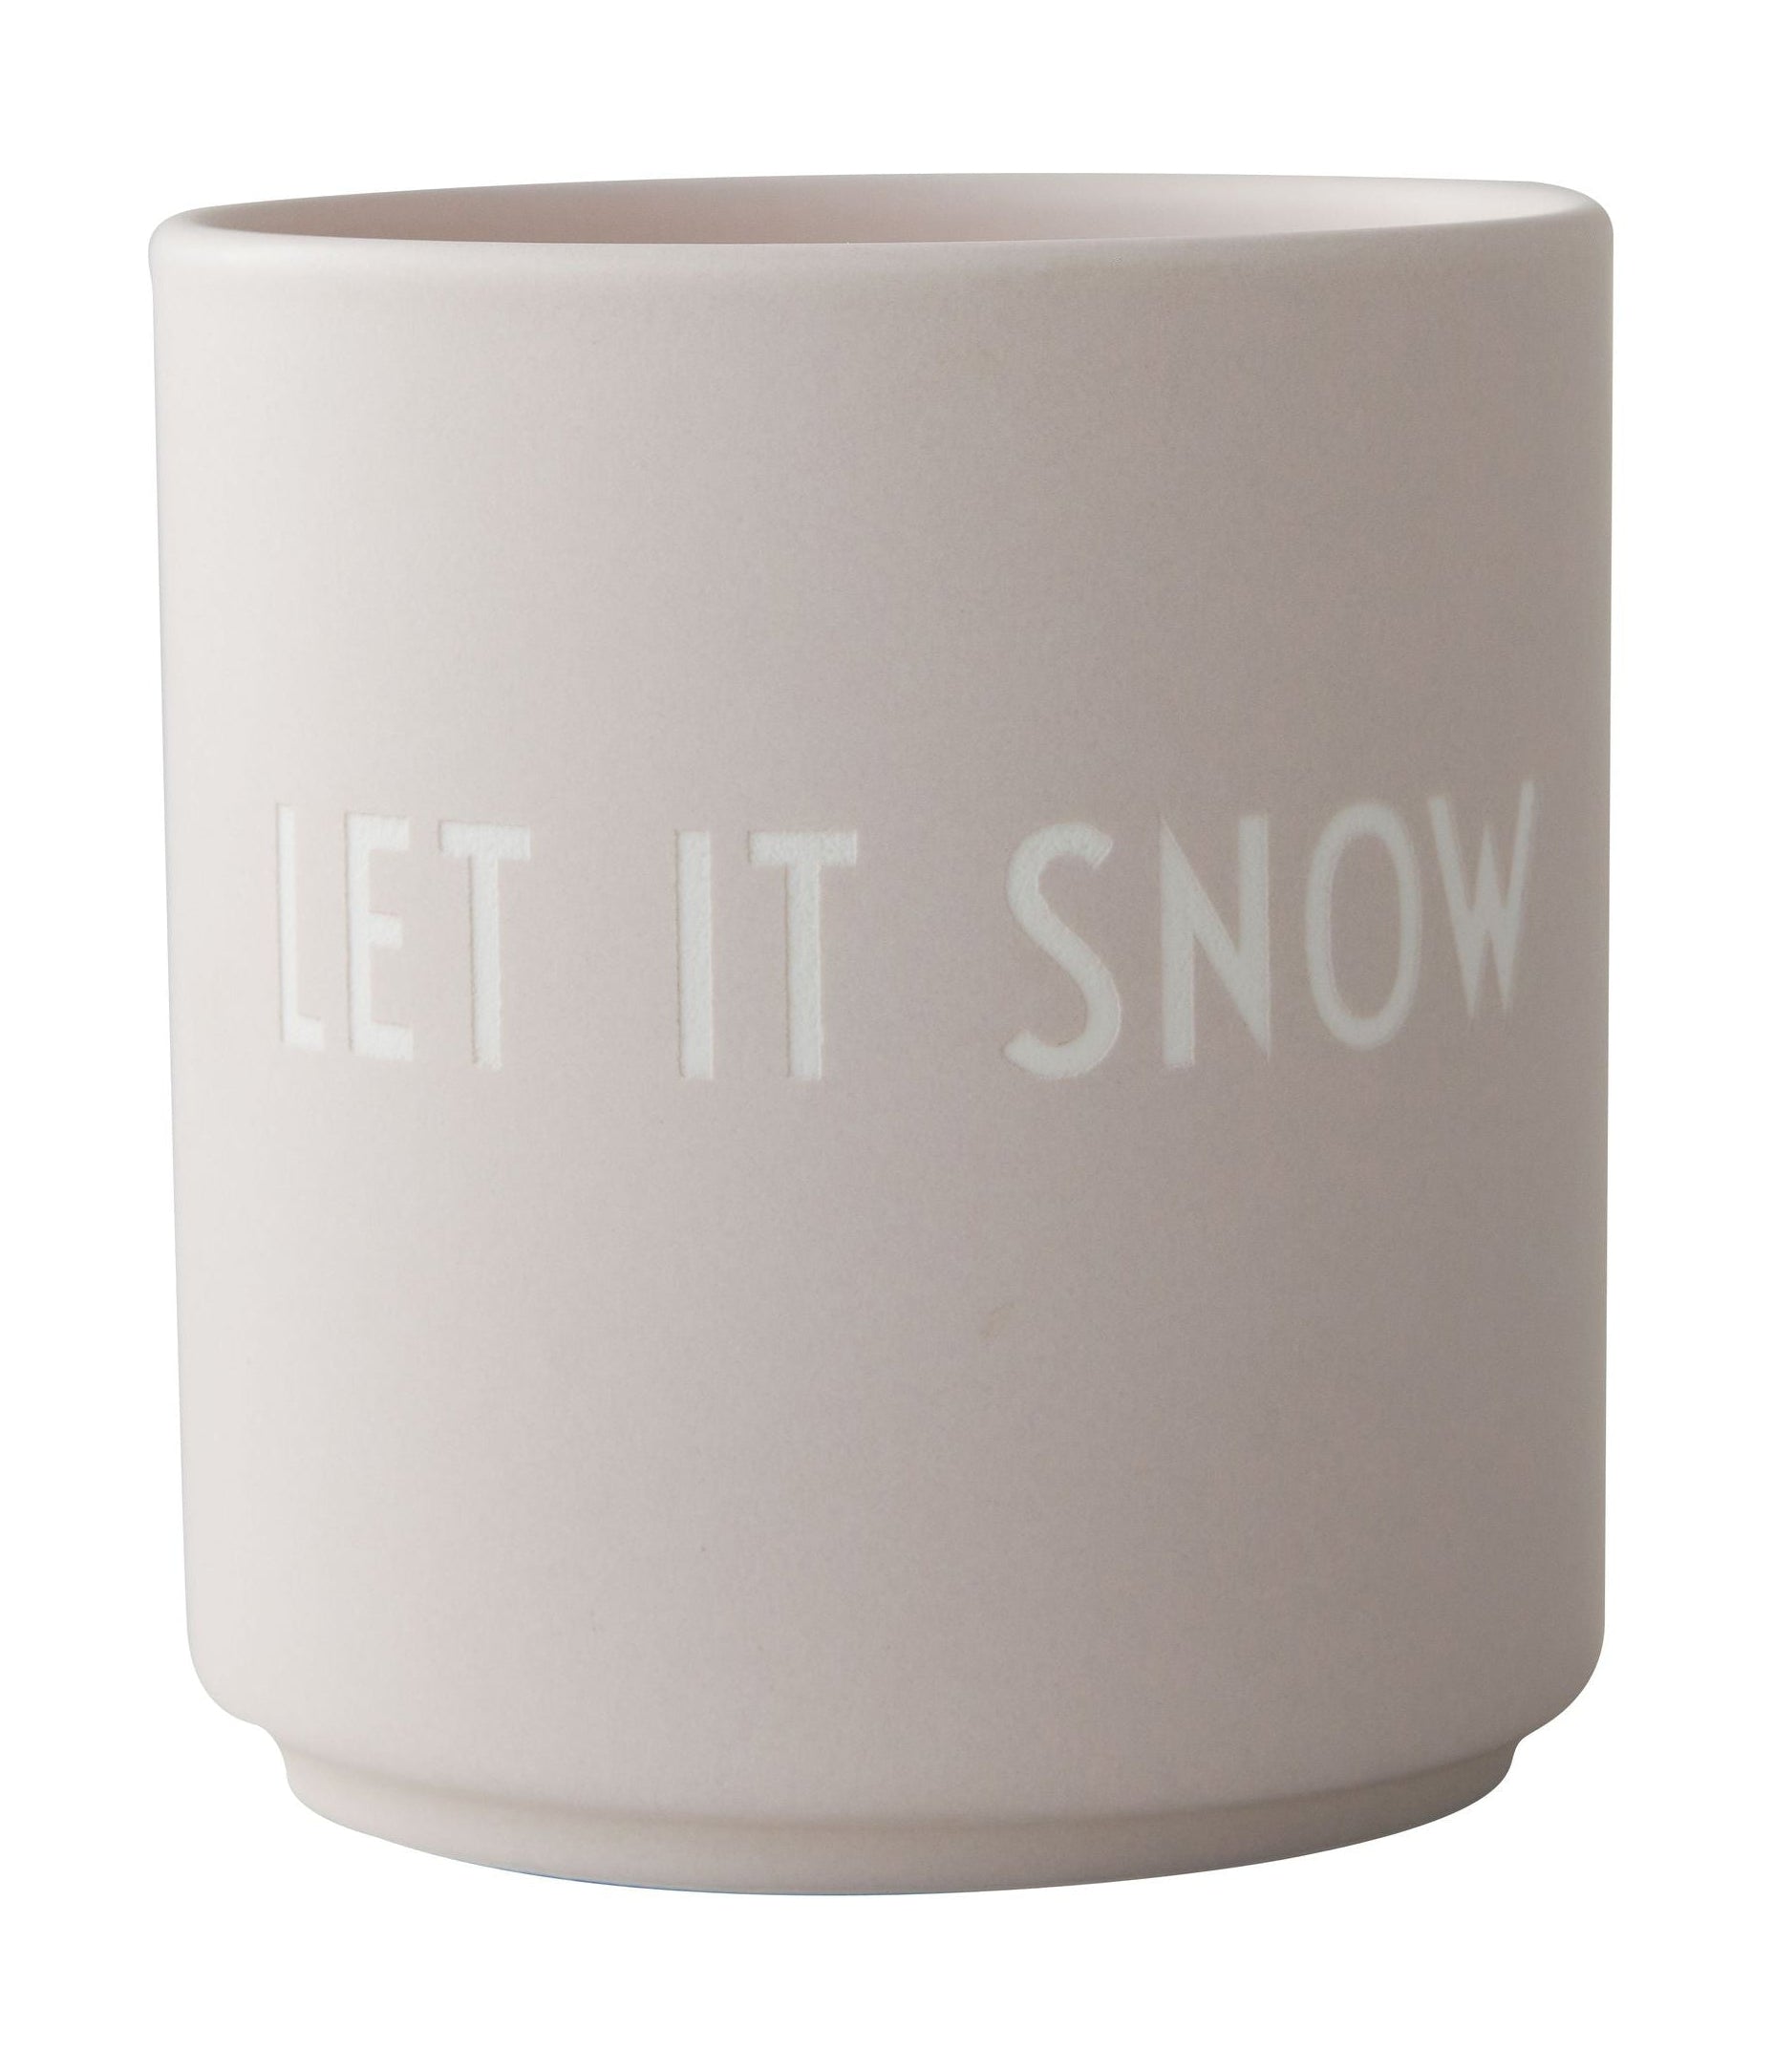 Designbrevets favoritmugg Let It Snow, Pastell Beige